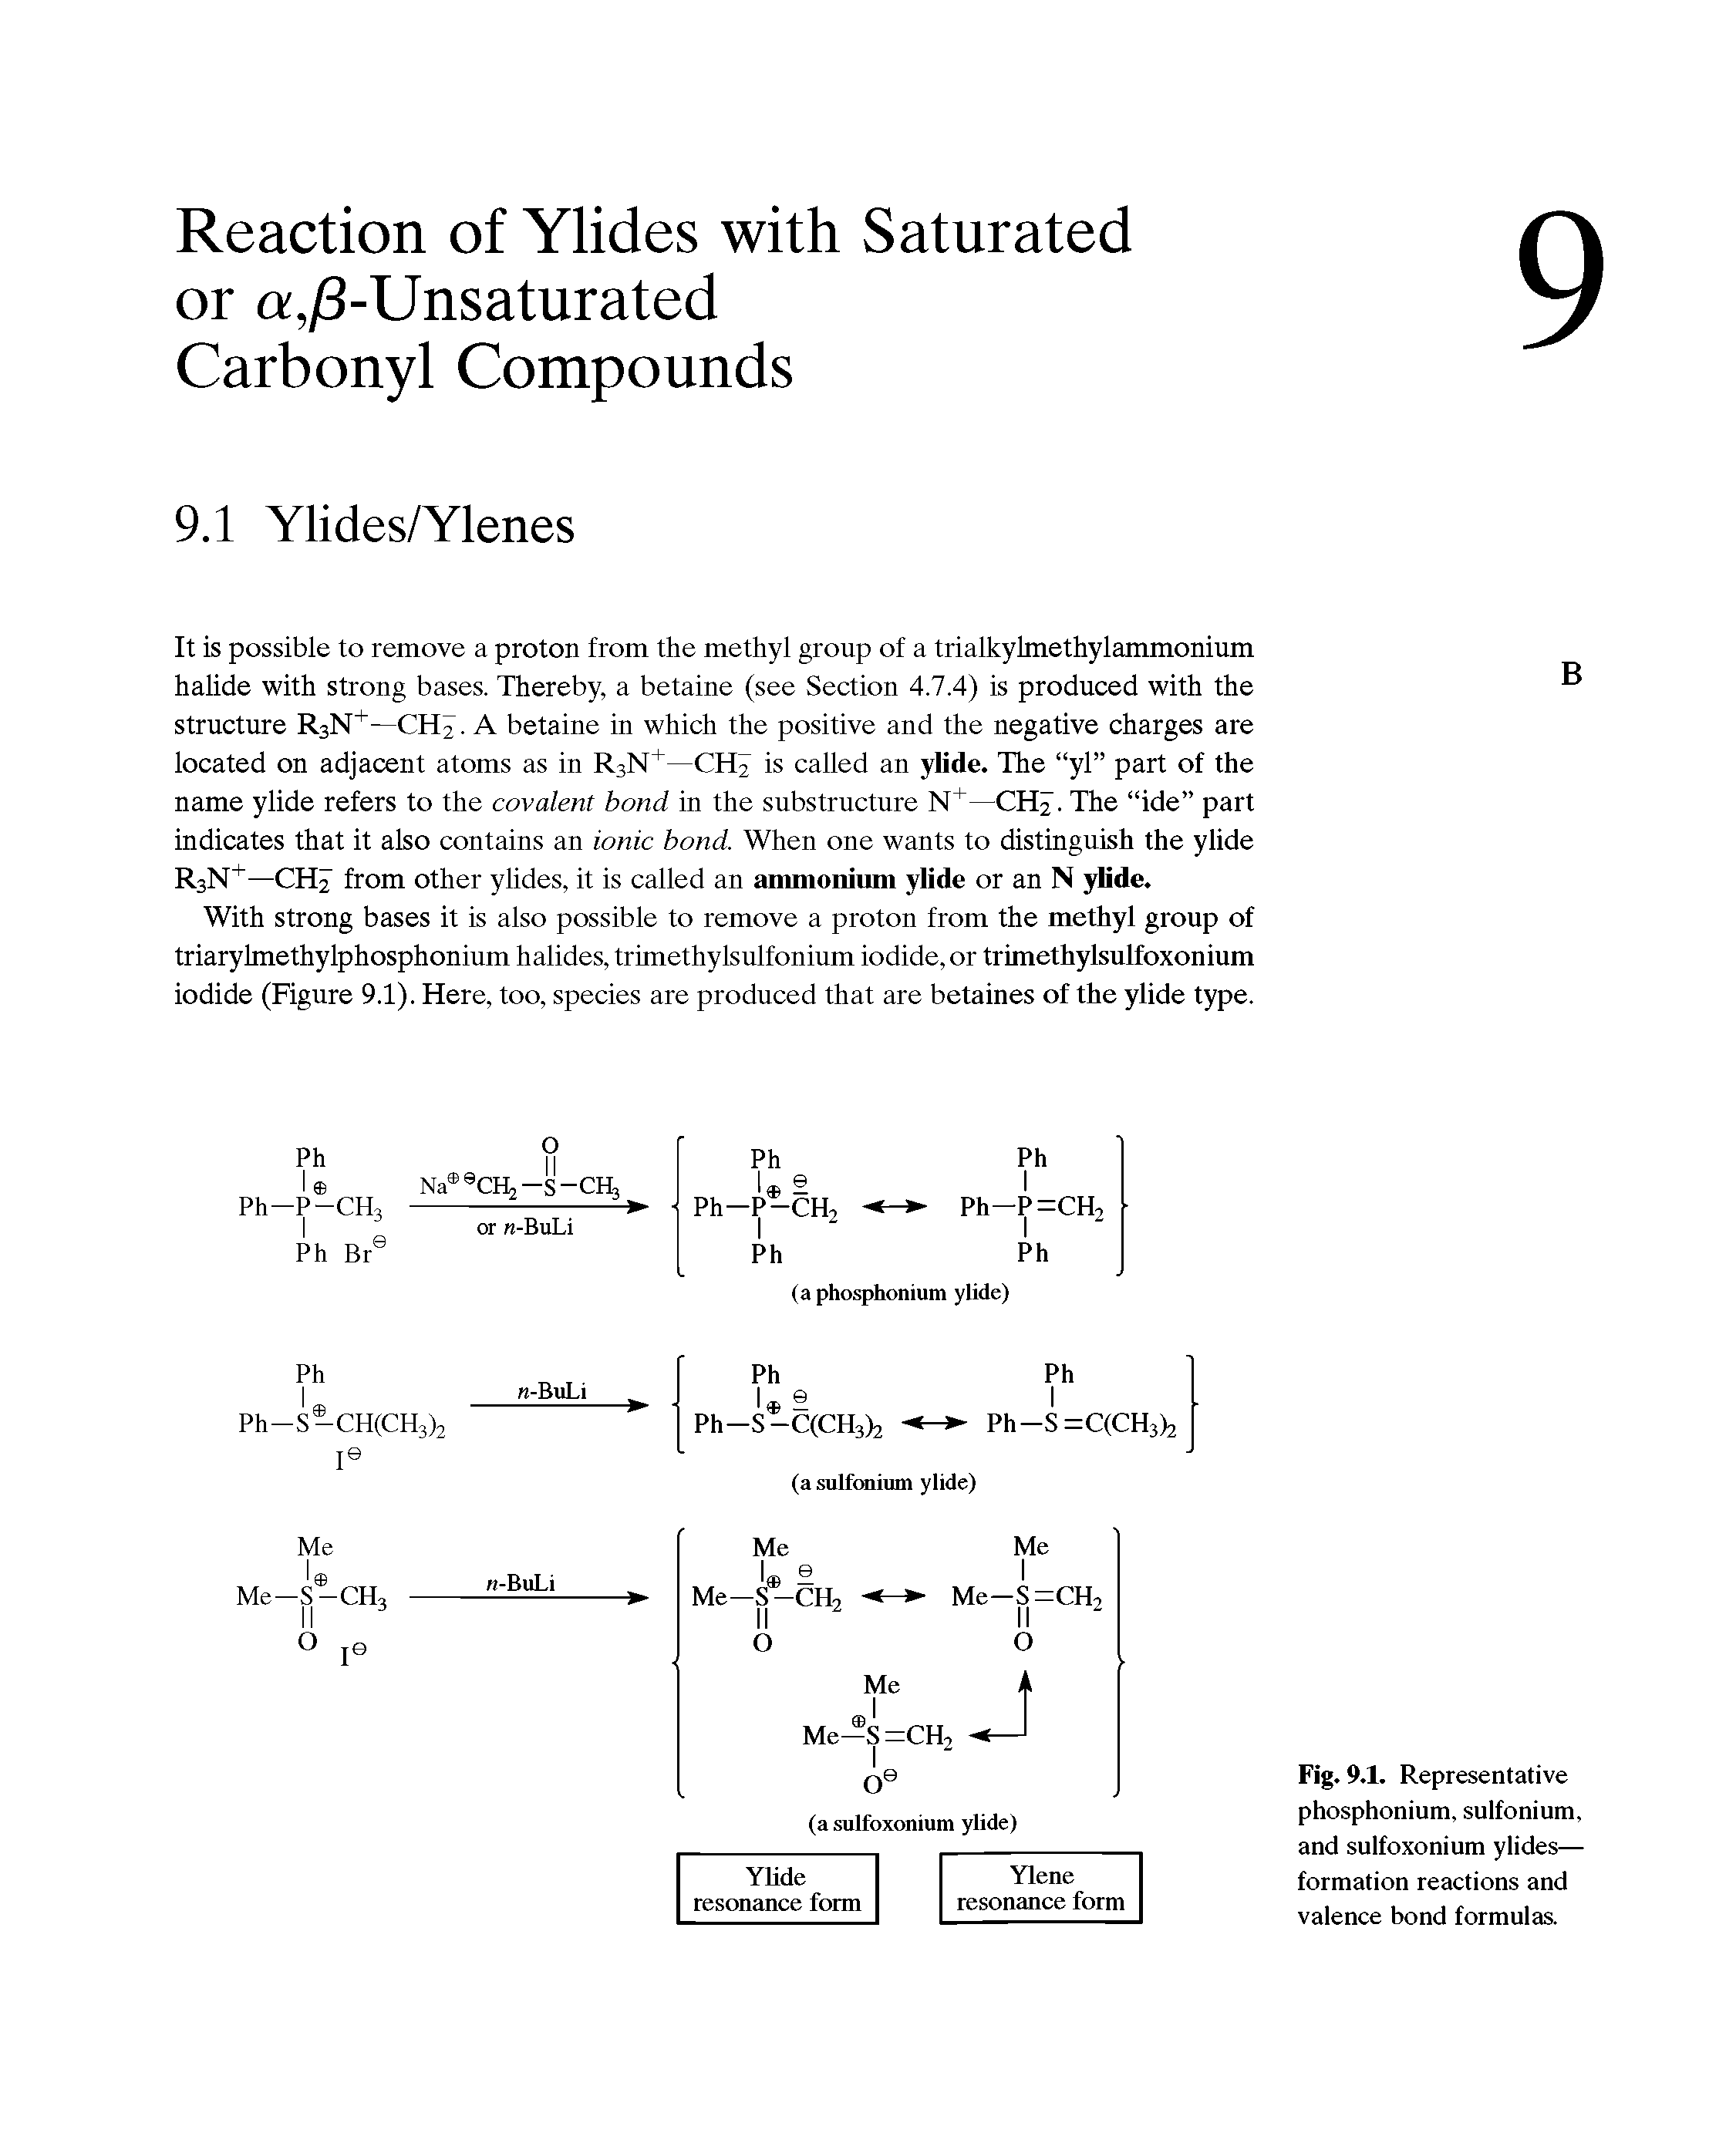 Fig. 9.1. Representative phosphonium, sulfonium, and sulfoxonium ylides— formation reactions and valence bond formulas.